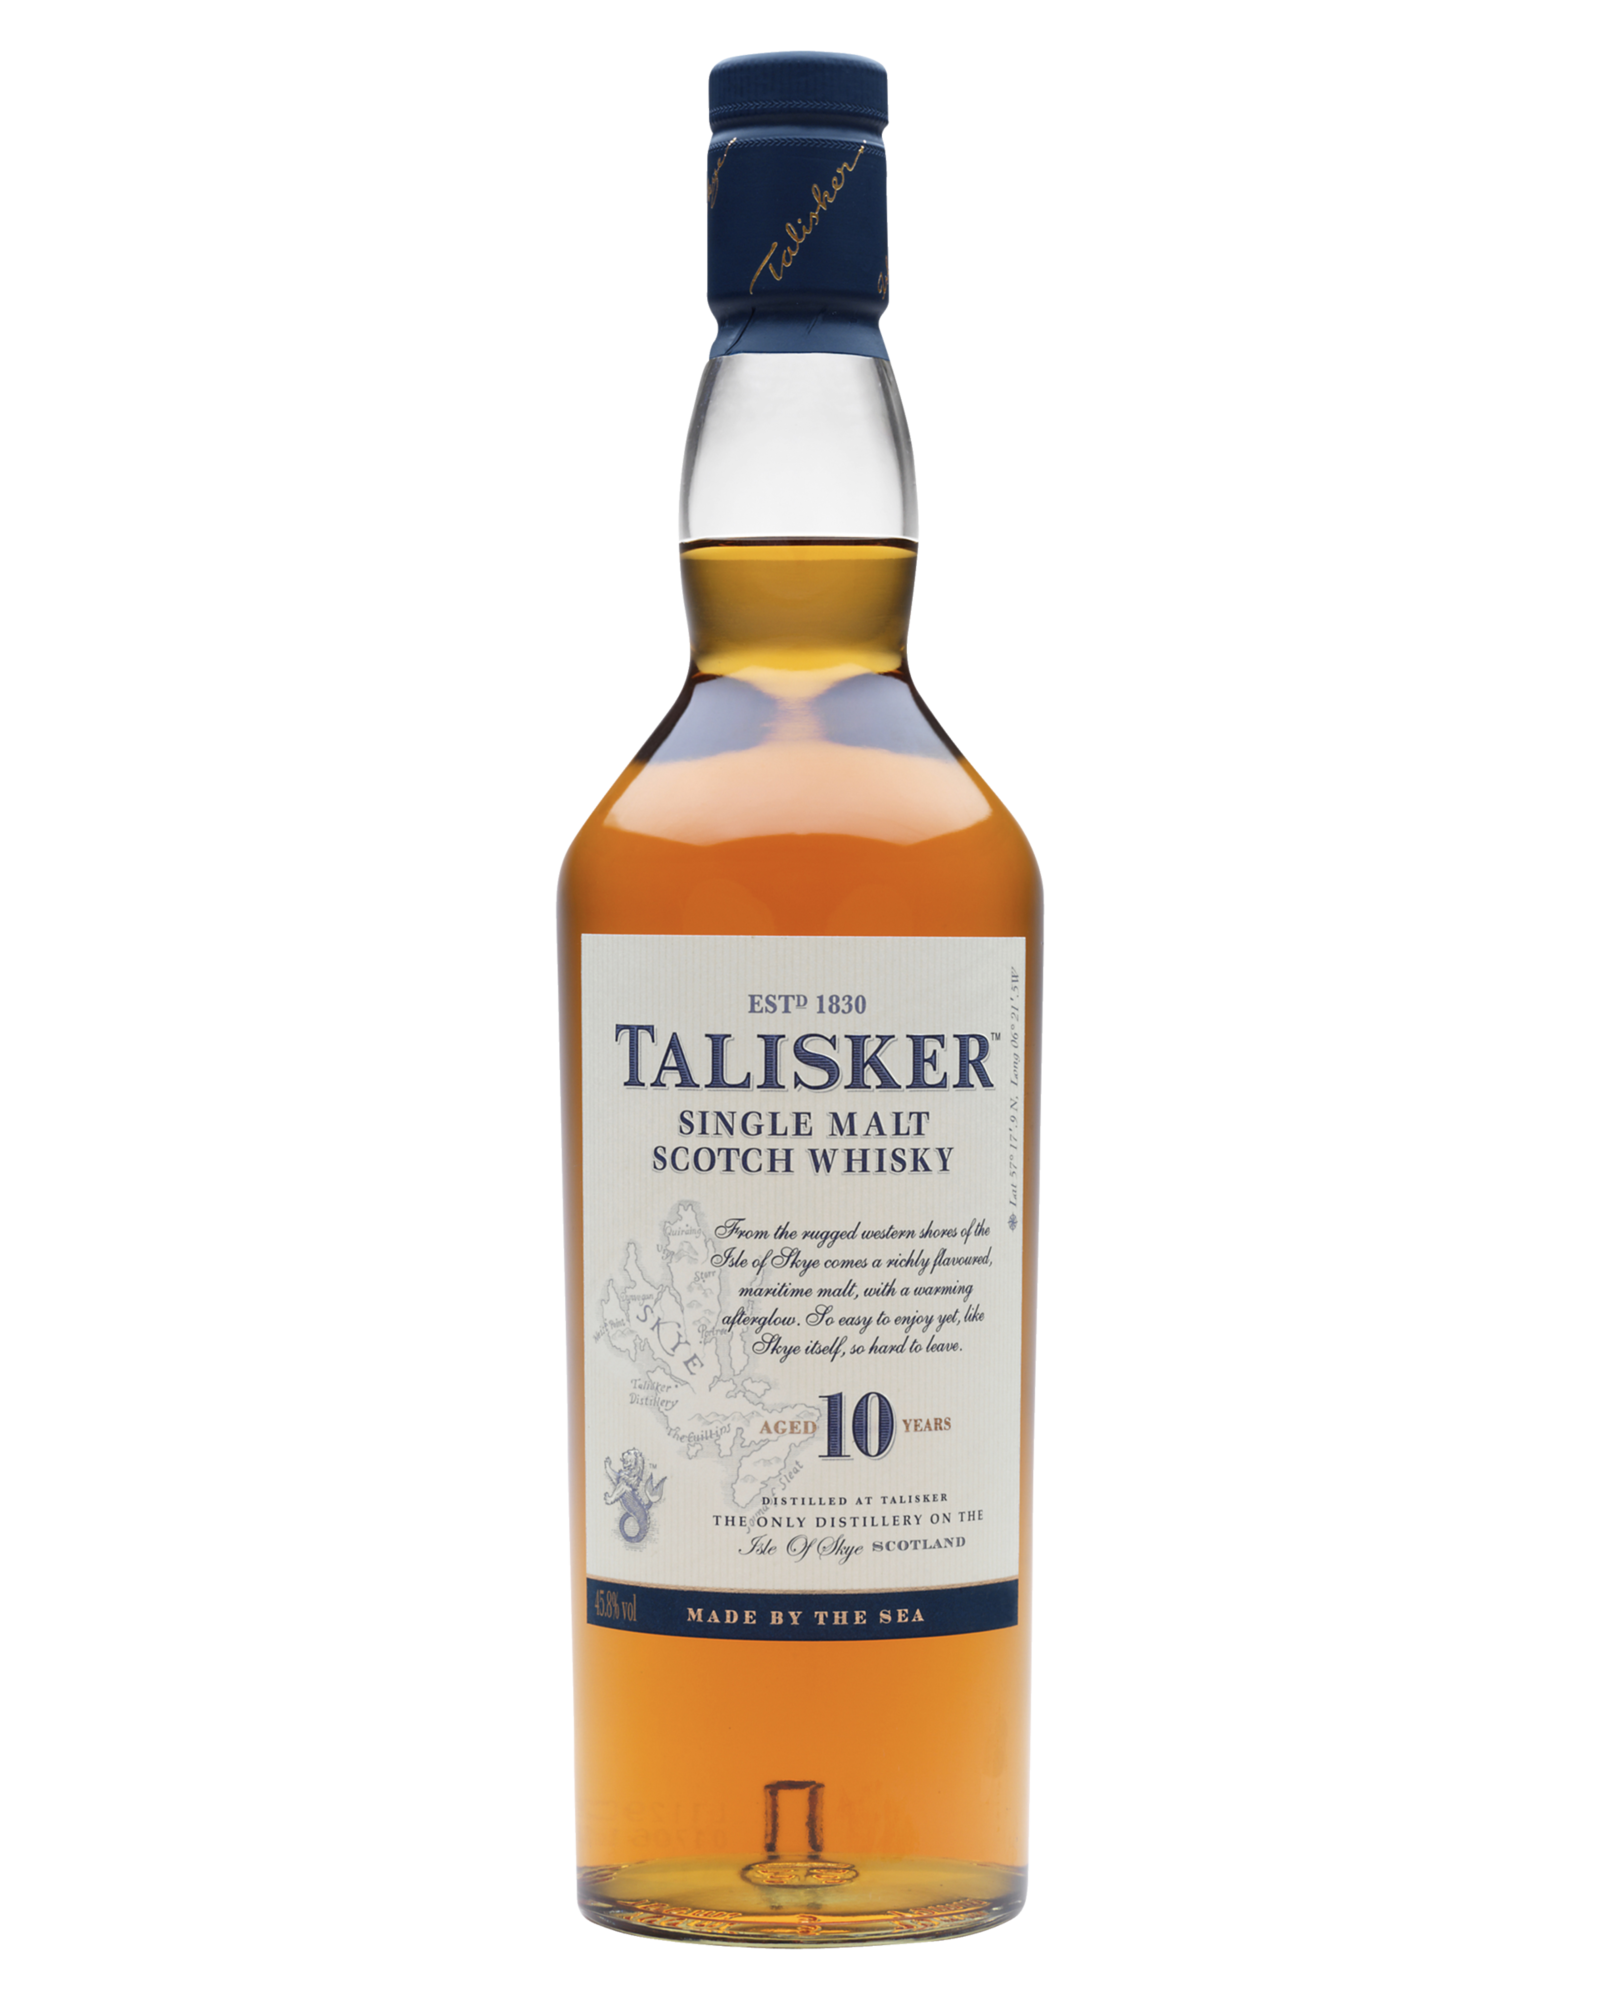 Талискер 10 купить. Talisker 10 Single Malt. Talisker Single Malt. Виски Talisker Single Malt 10 aged years. Scottish Whisky Talisker.